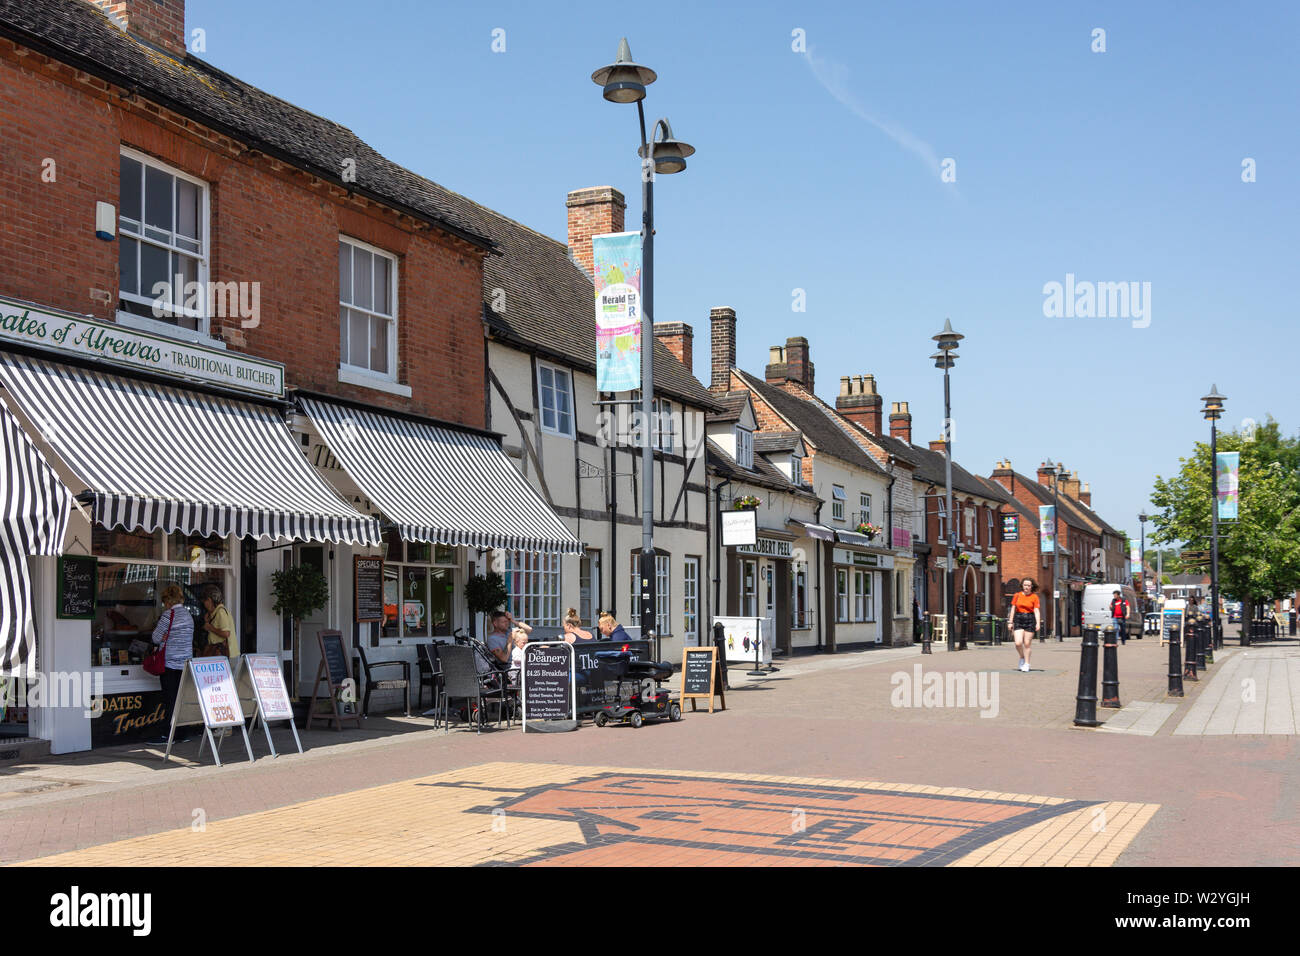 Pedestrianised Colehill, Tamworth, Staffordshire, England, United Kingdom Stock Photo